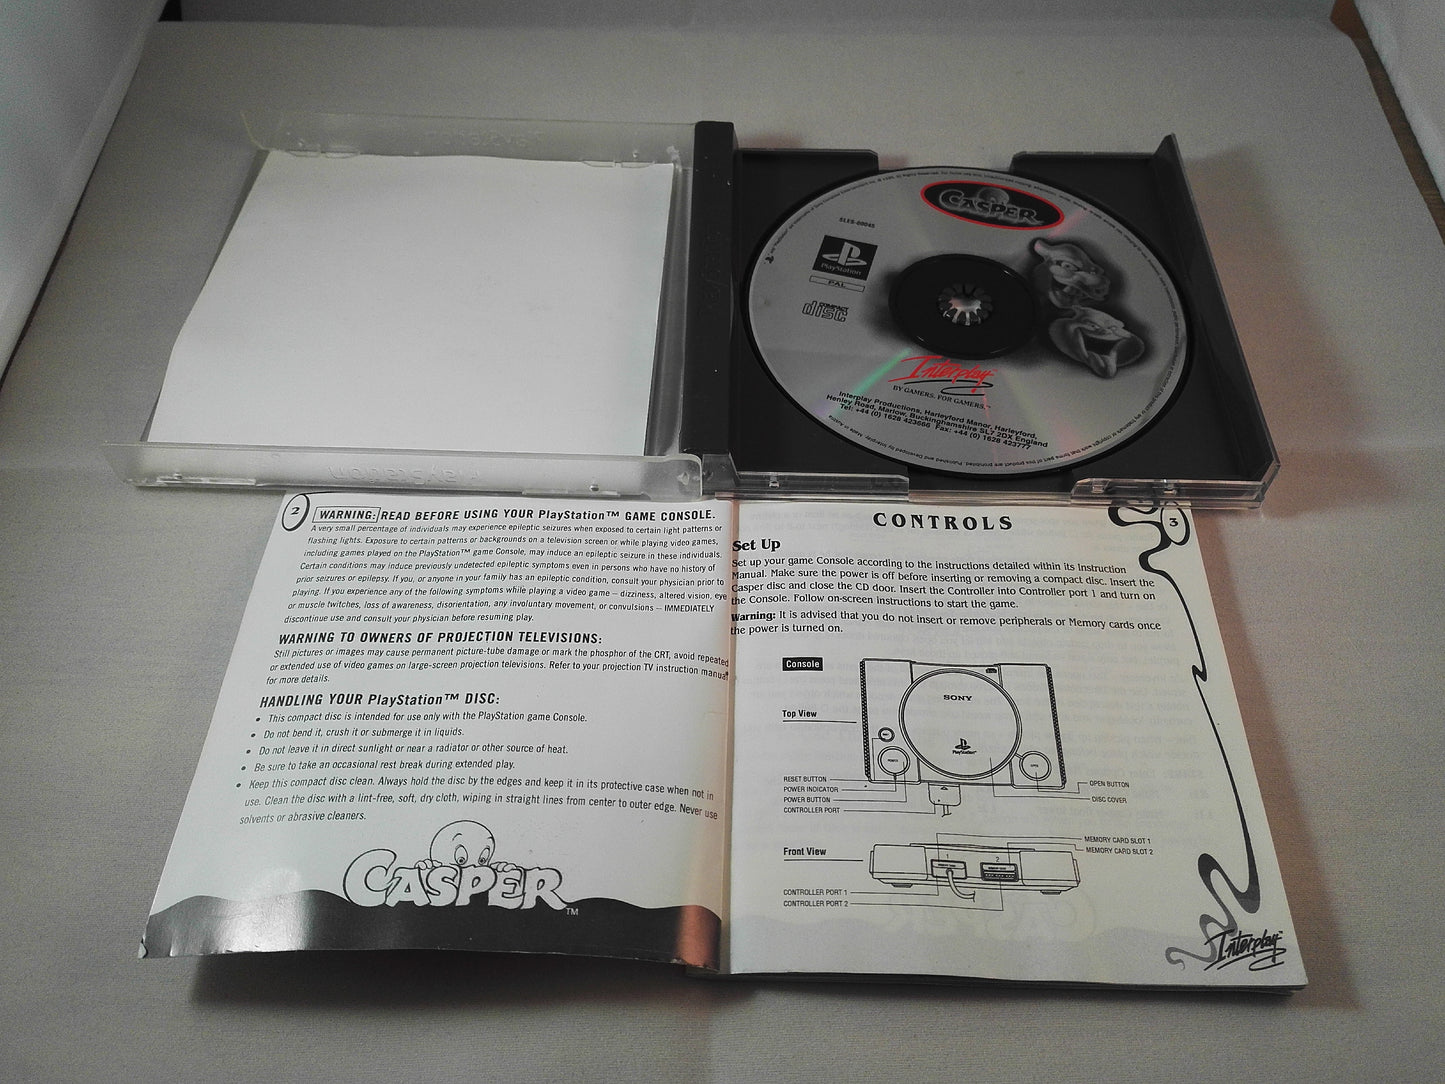 Casper & Casper: Friends Around The World PS1 (Sony PlayStation 1) game bundle